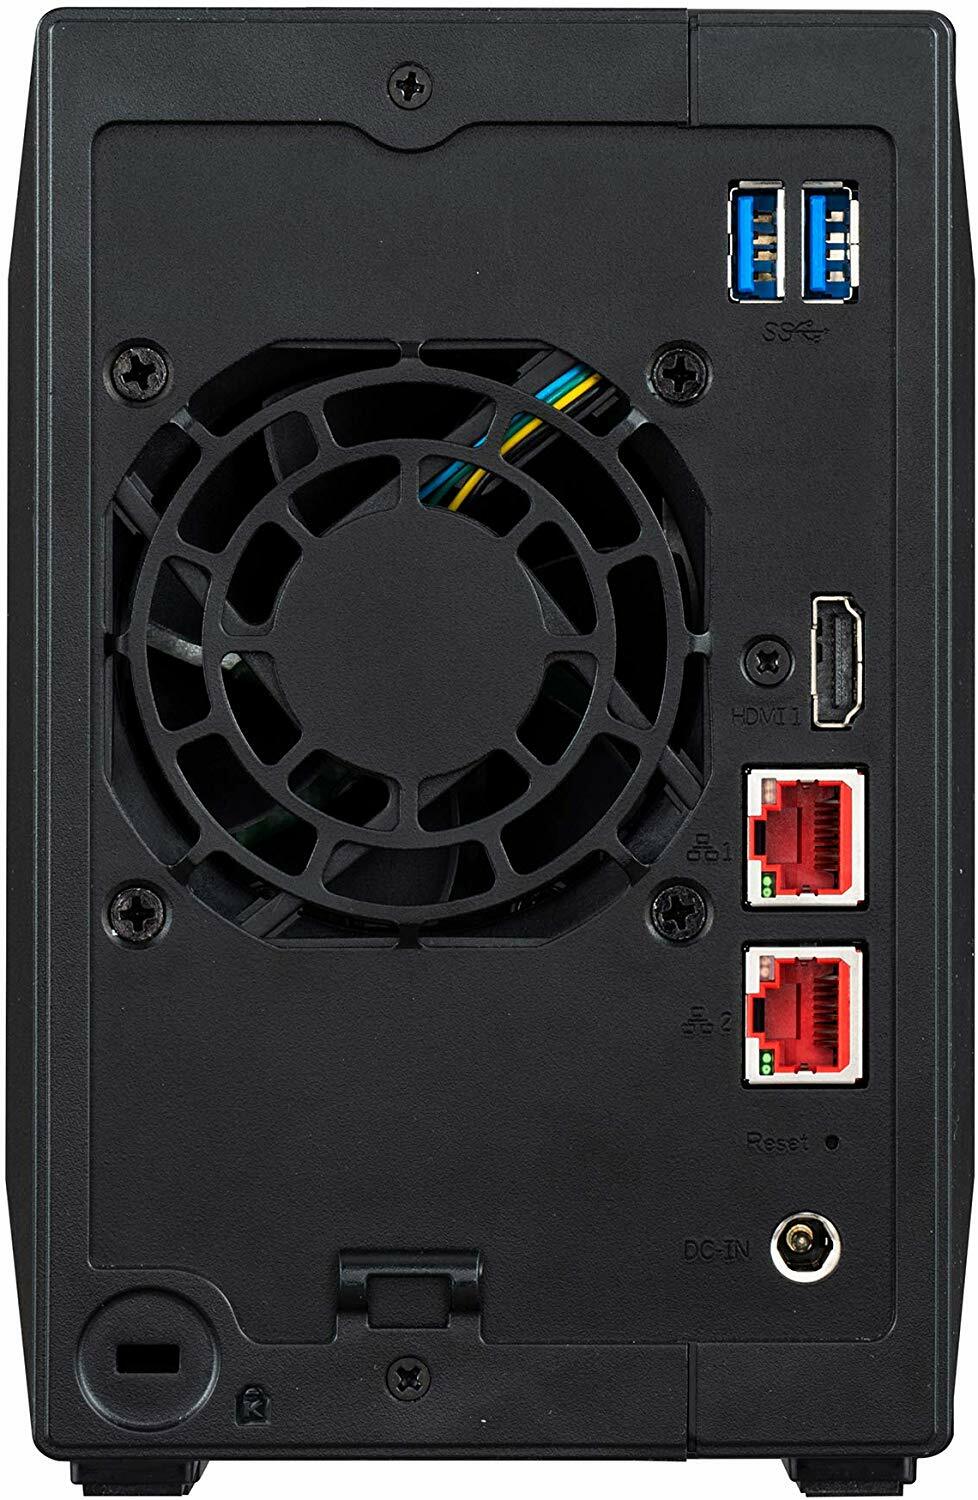 ASUSTOR AS5202T 2-bay NAS Server / Black